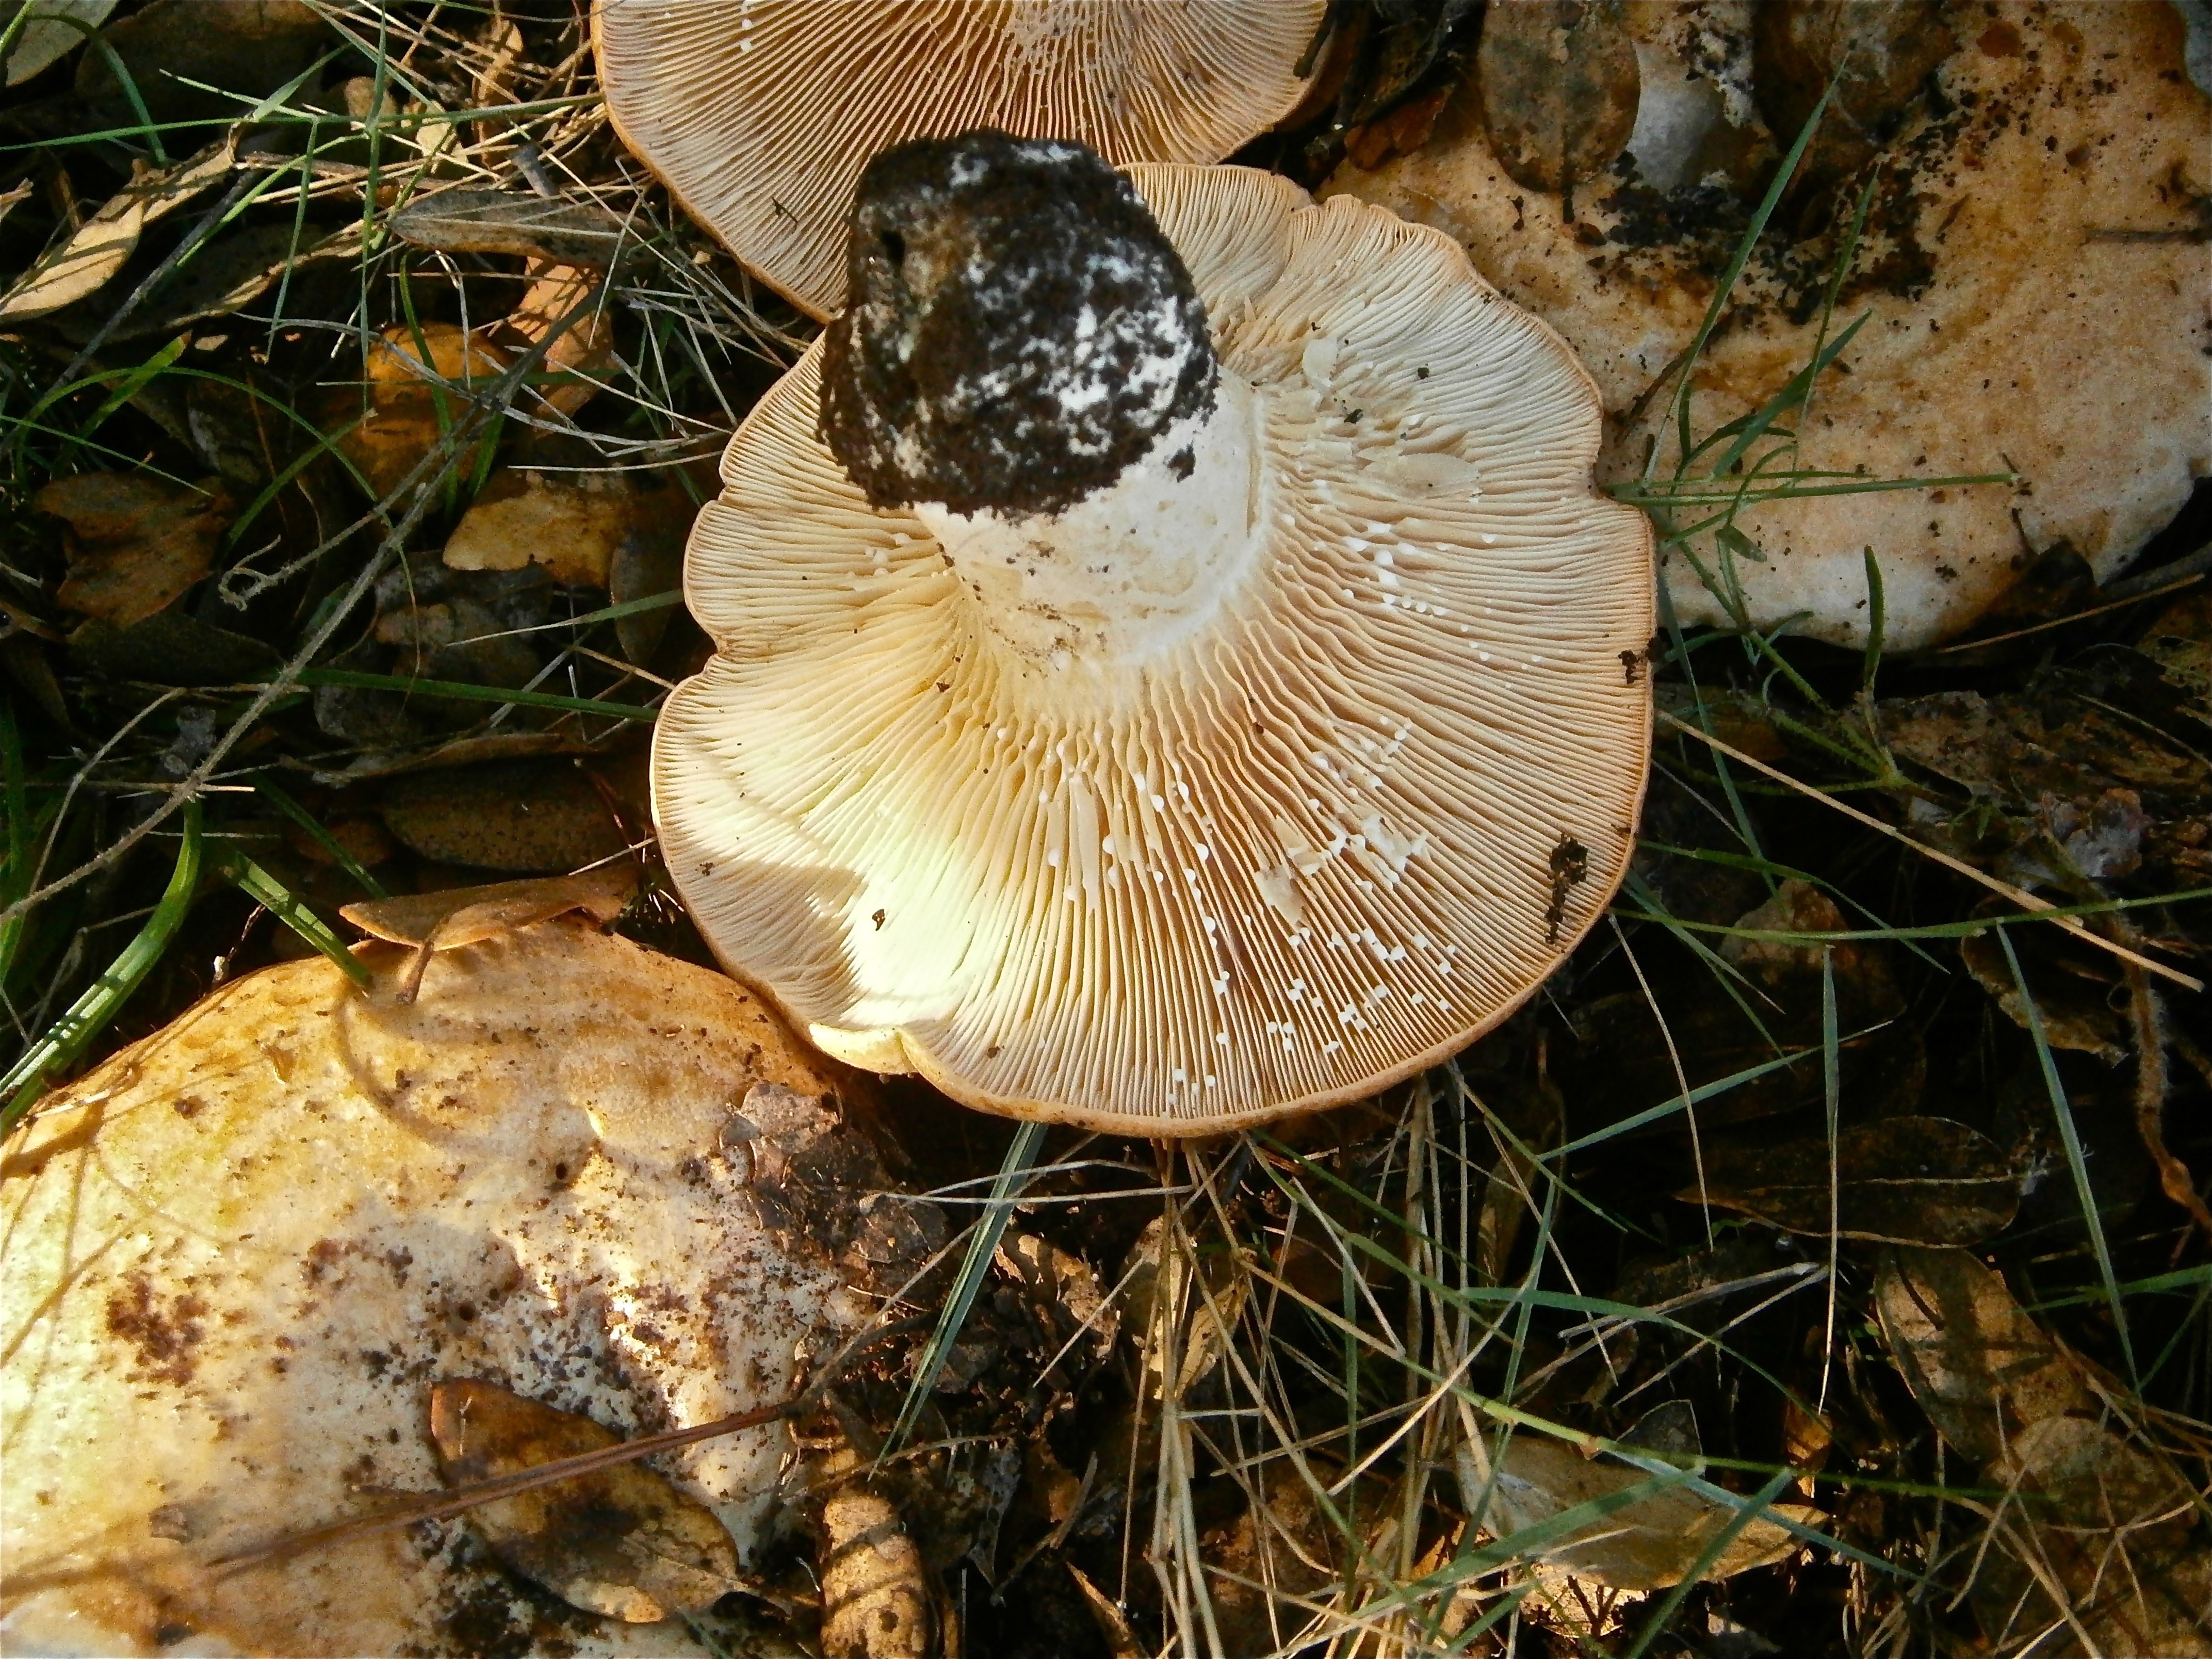 beige wild mushrooms